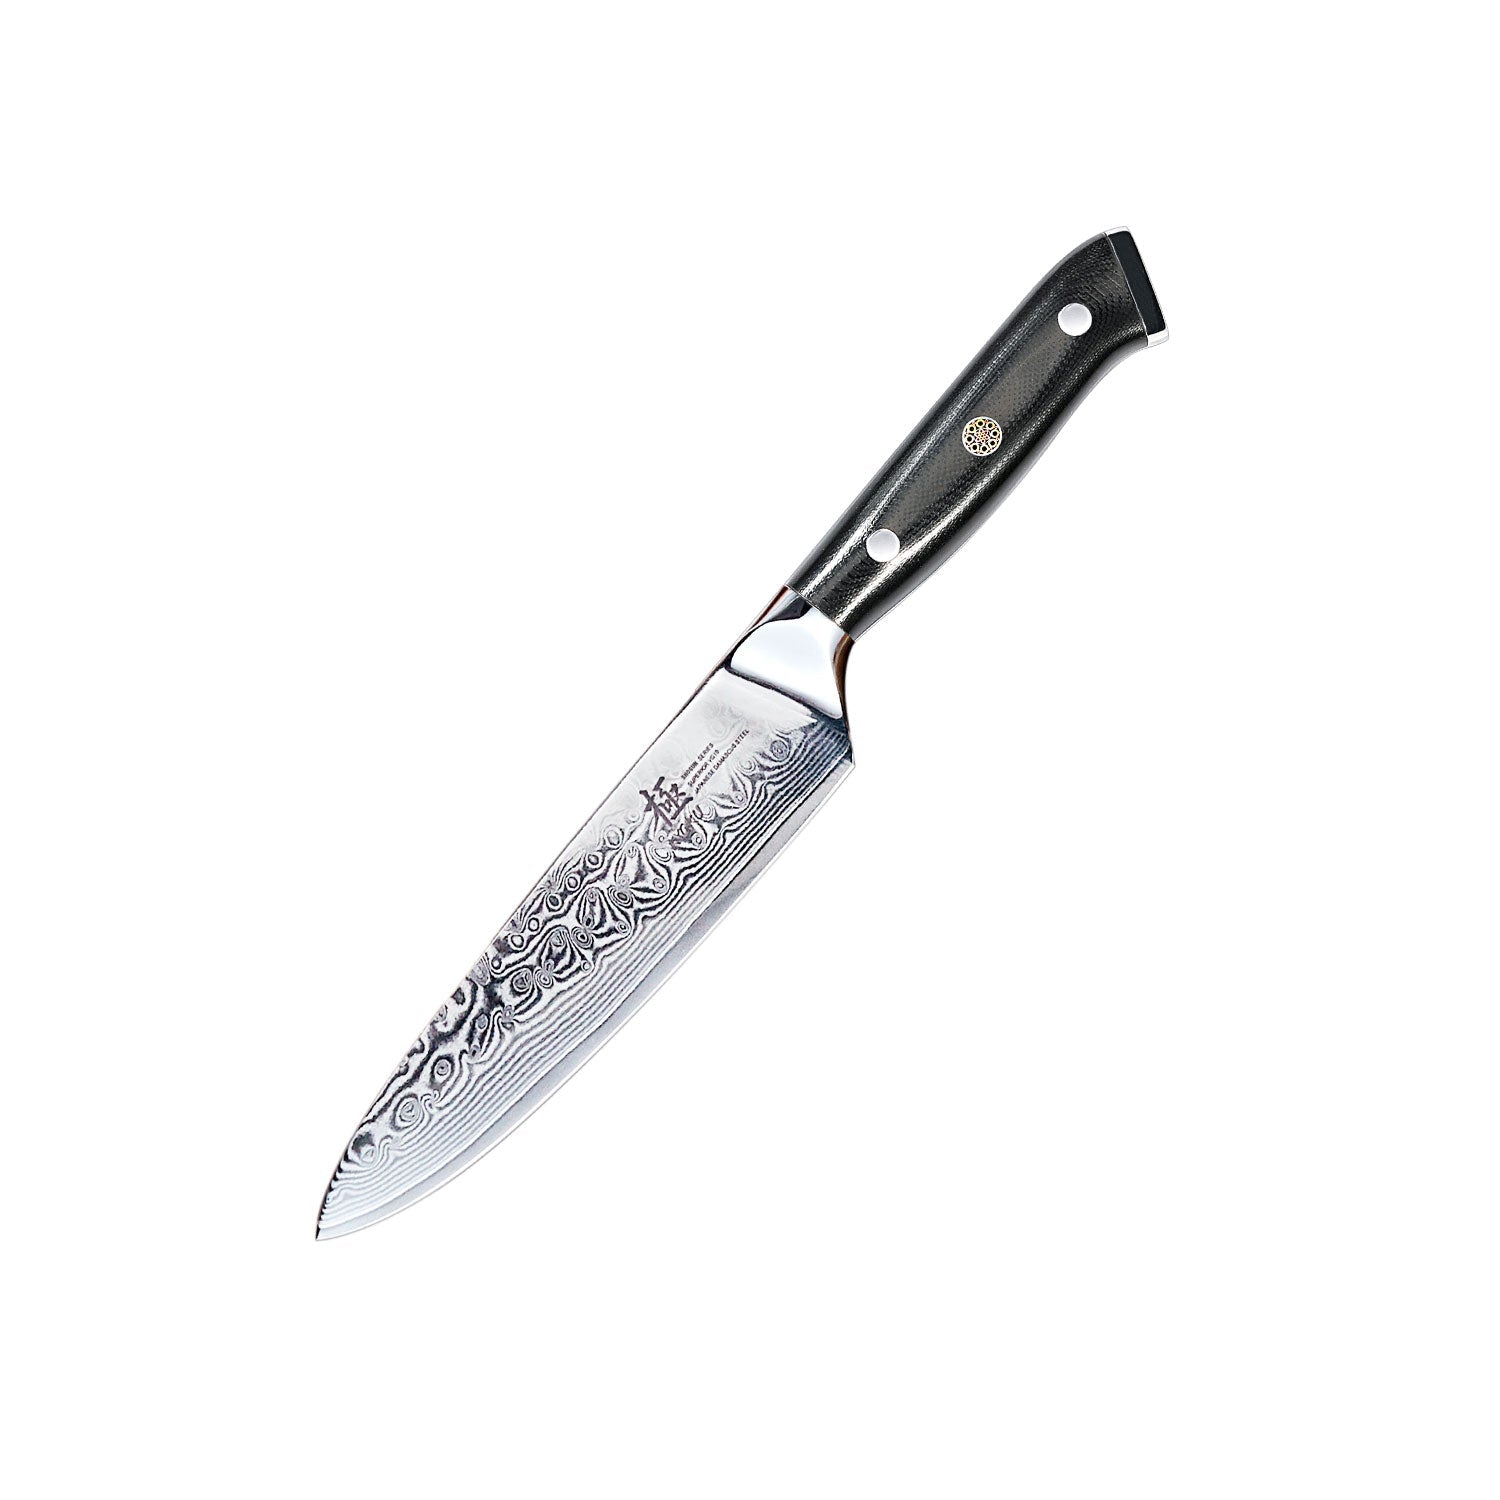 Shop Kyoku Japanese Utility Knives | Multi-Purpose Design